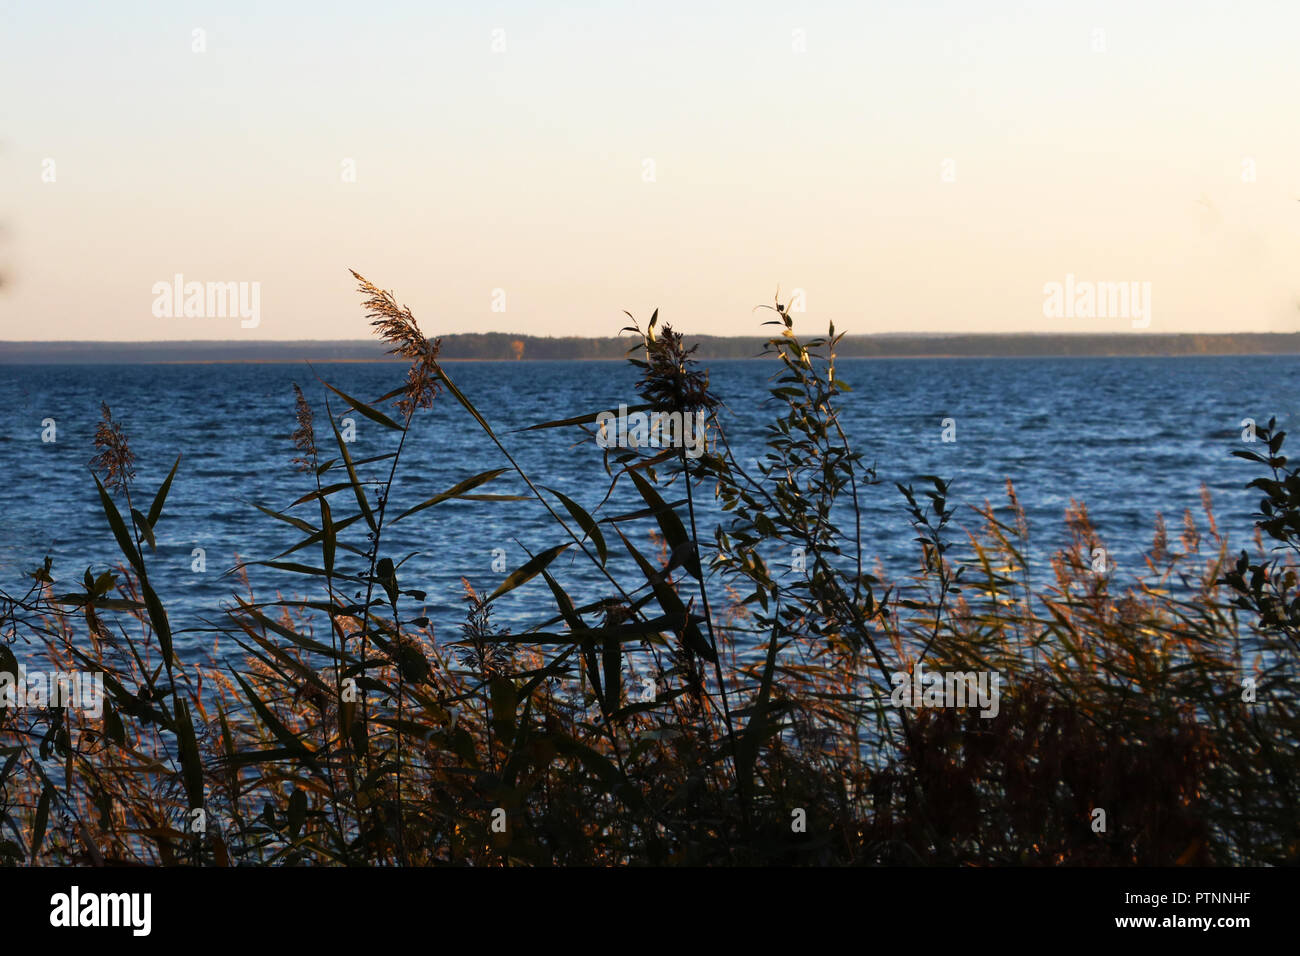 Coastal vegetation on the background of the lake in autumn, background Stock Photo